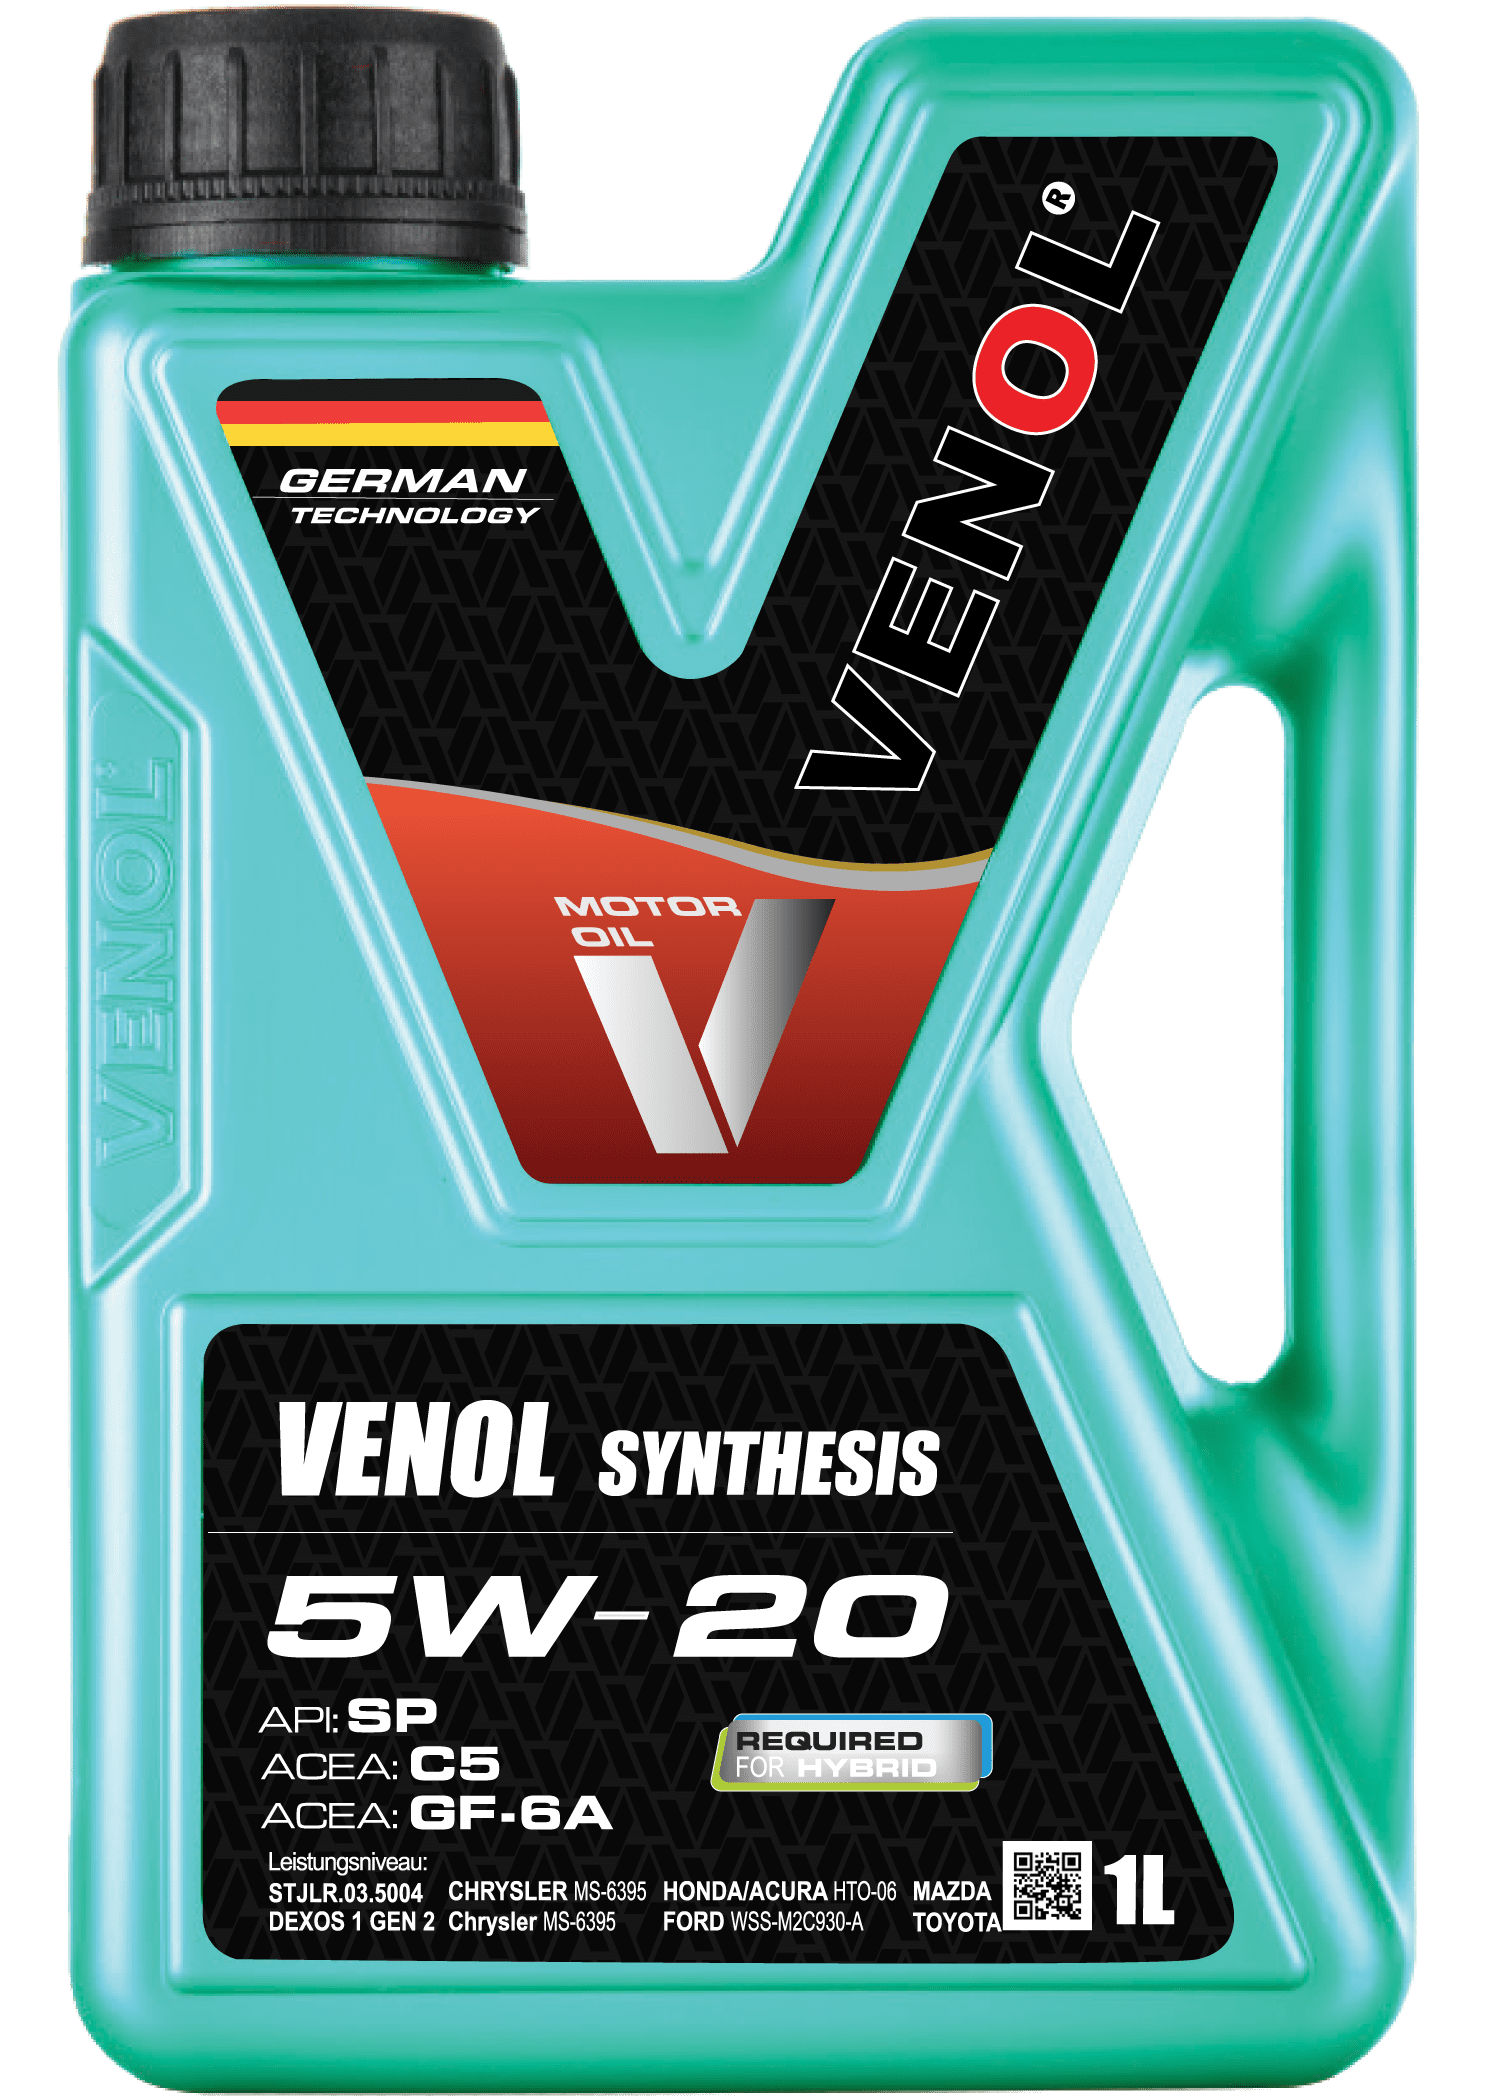 SYNTHESIS 5W-20 - VENOL